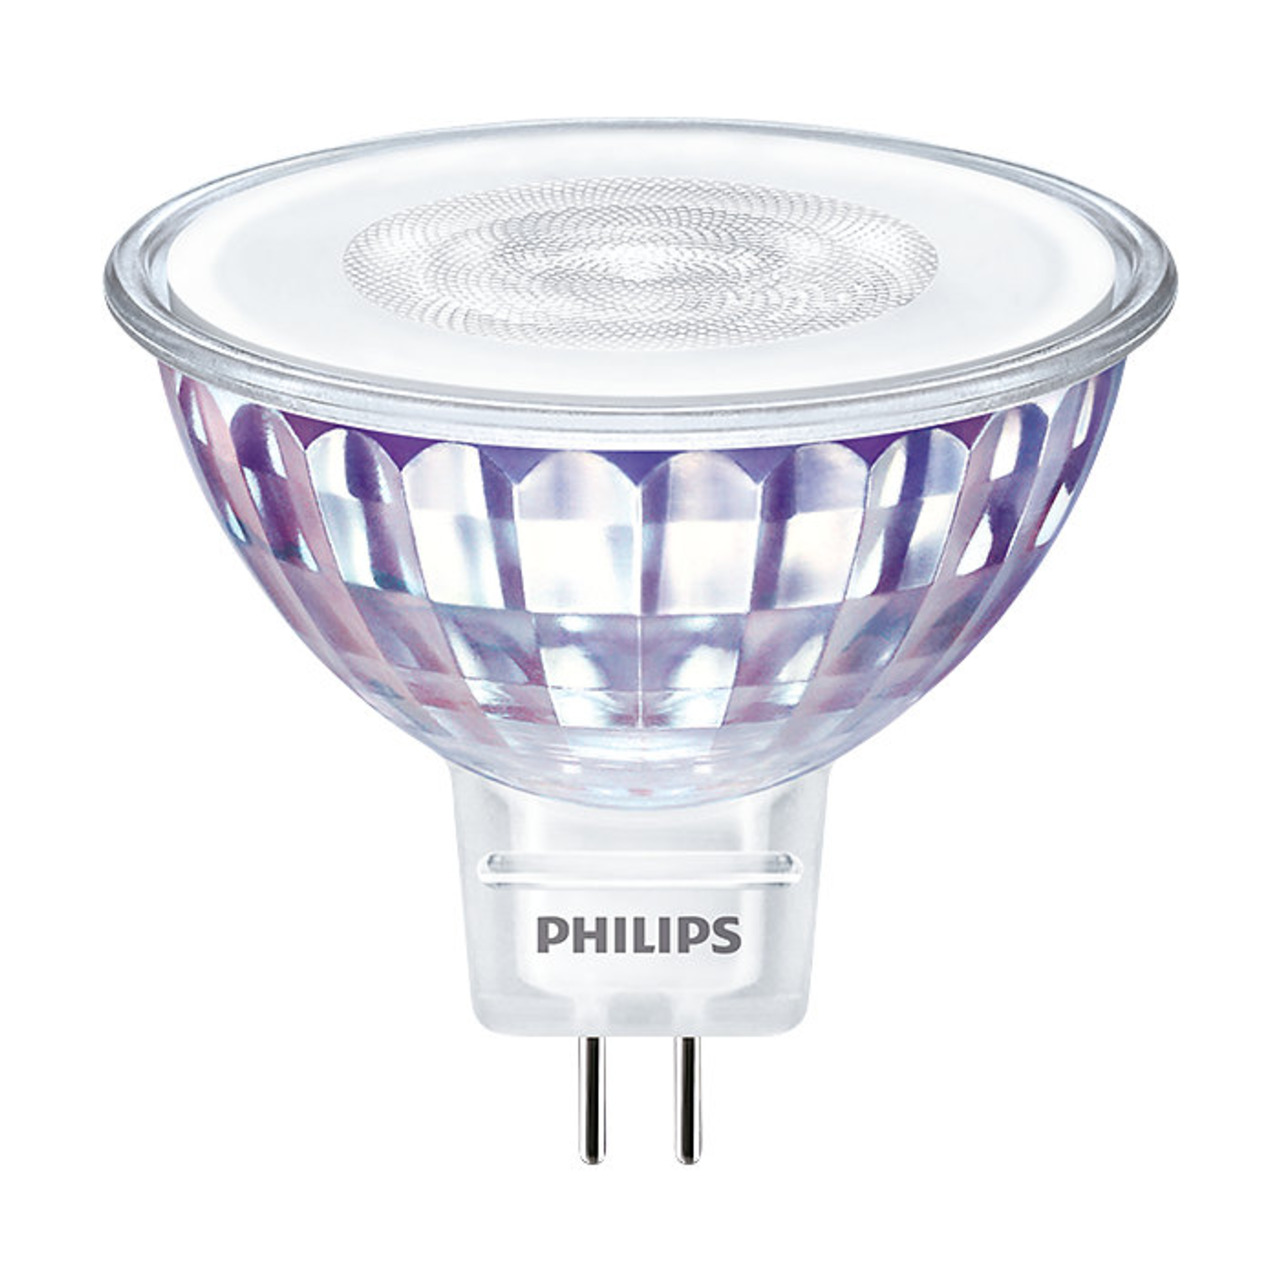 Philips 7-5-W-GU5-3-LED-Lampe Master LEDspot Value- MR16- 630 lm- warmweiss (3000 K)- 36- dimmbar unter Beleuchtung